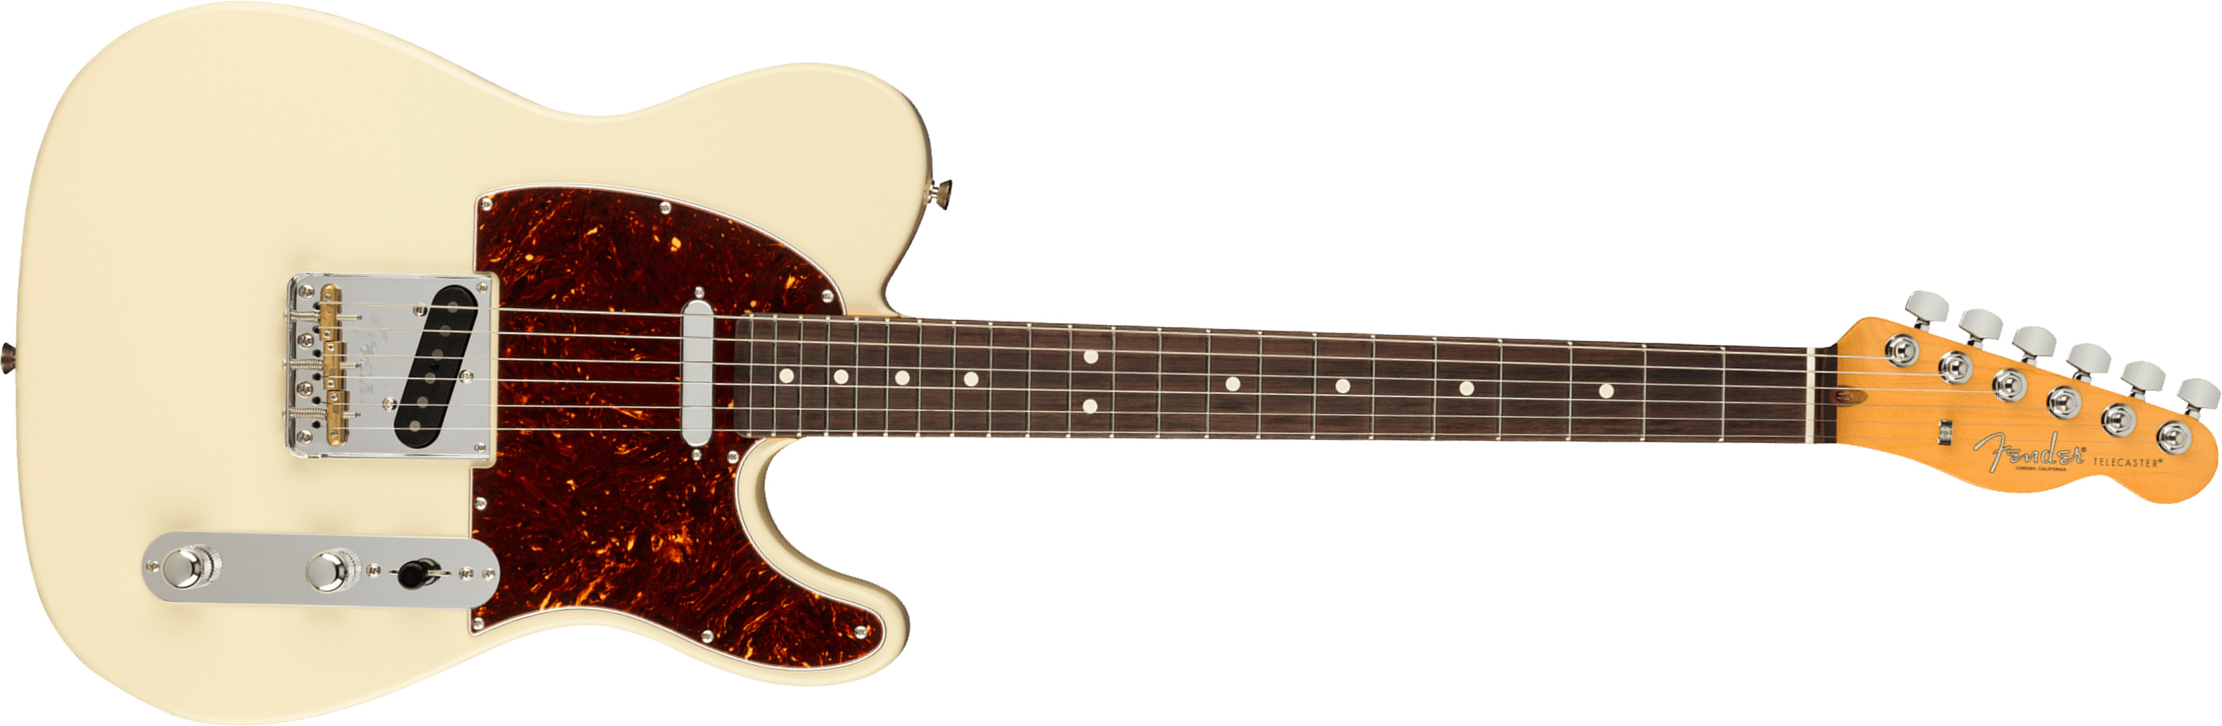 Fender Tele American Professional Ii Usa Rw - Olympic White - Tel shape electric guitar - Main picture